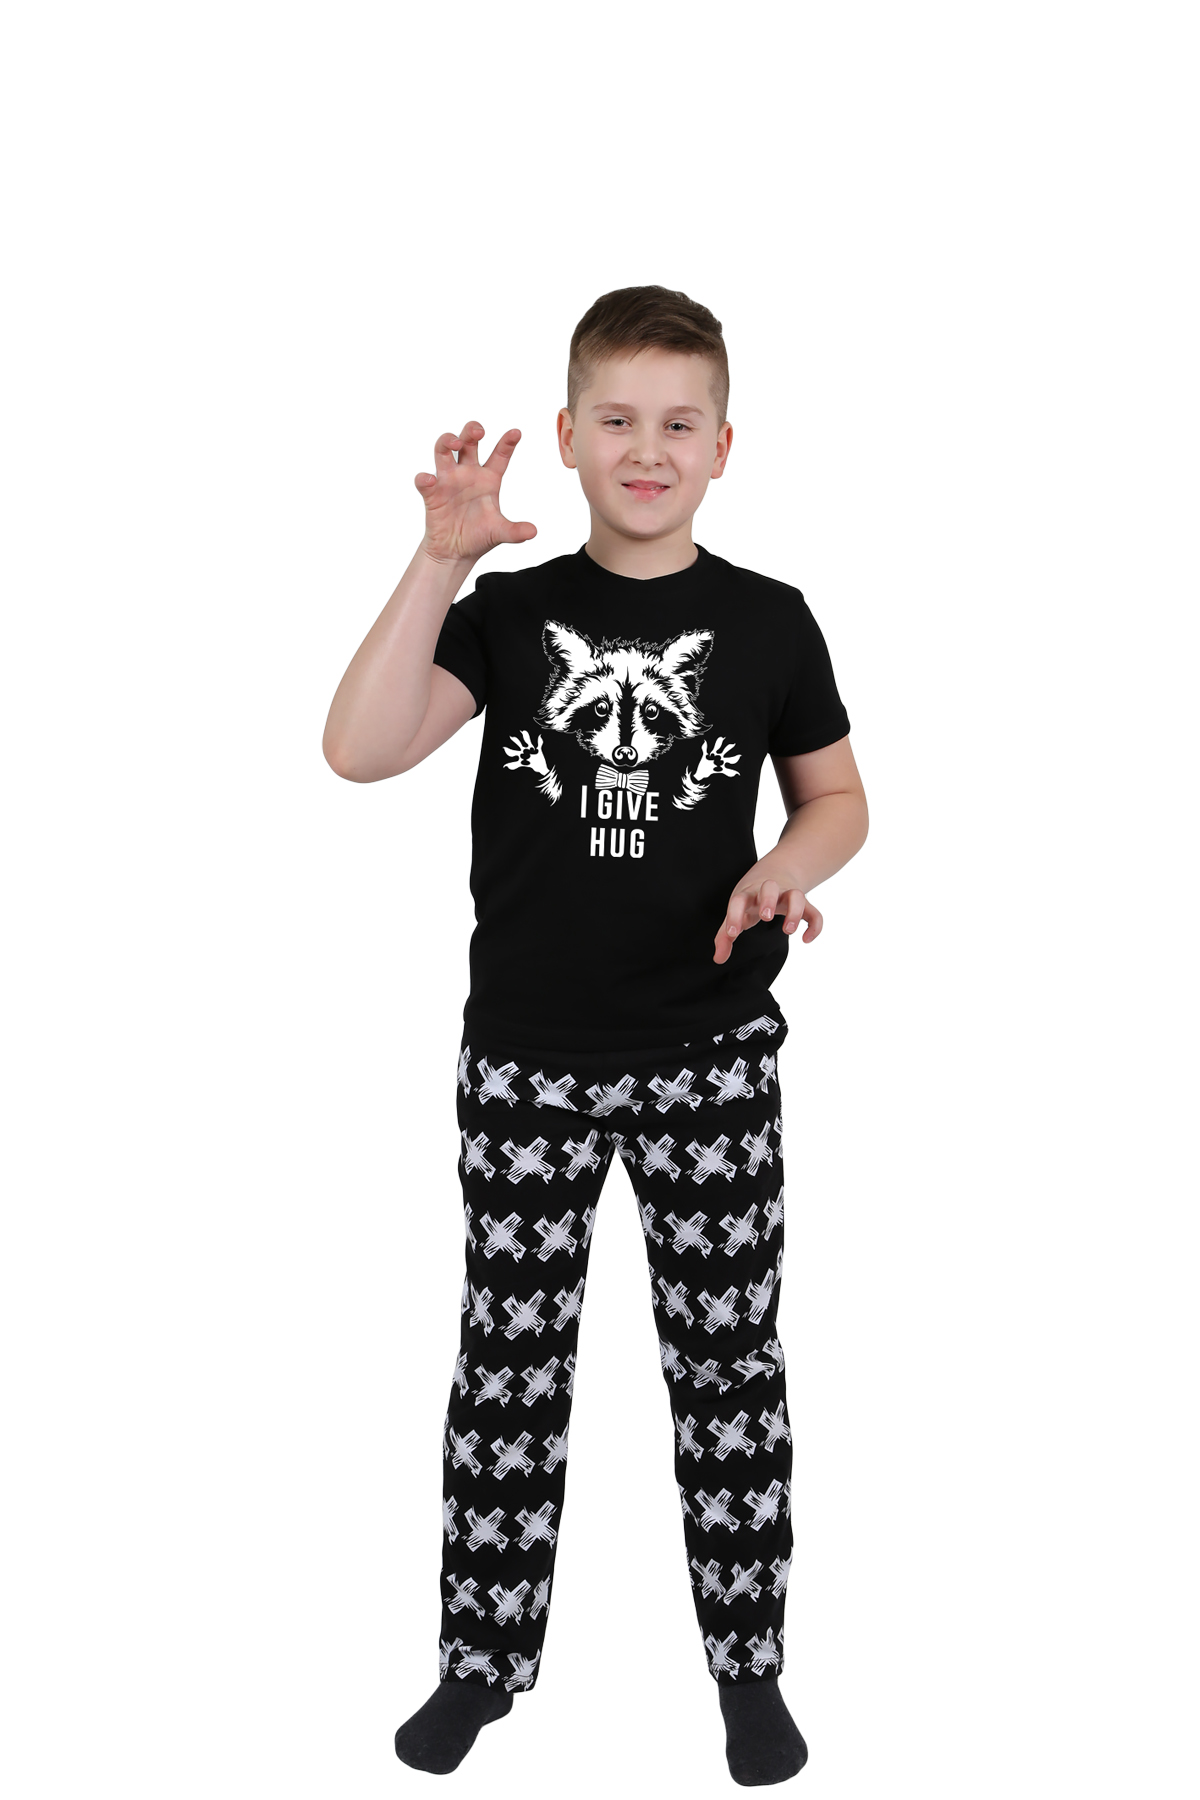 Детская пижама Енотик Цвет: Черный (12 лет), размер 12 лет otj636459 Детская пижама Енотик Цвет: Черный (12 лет) - фото 1